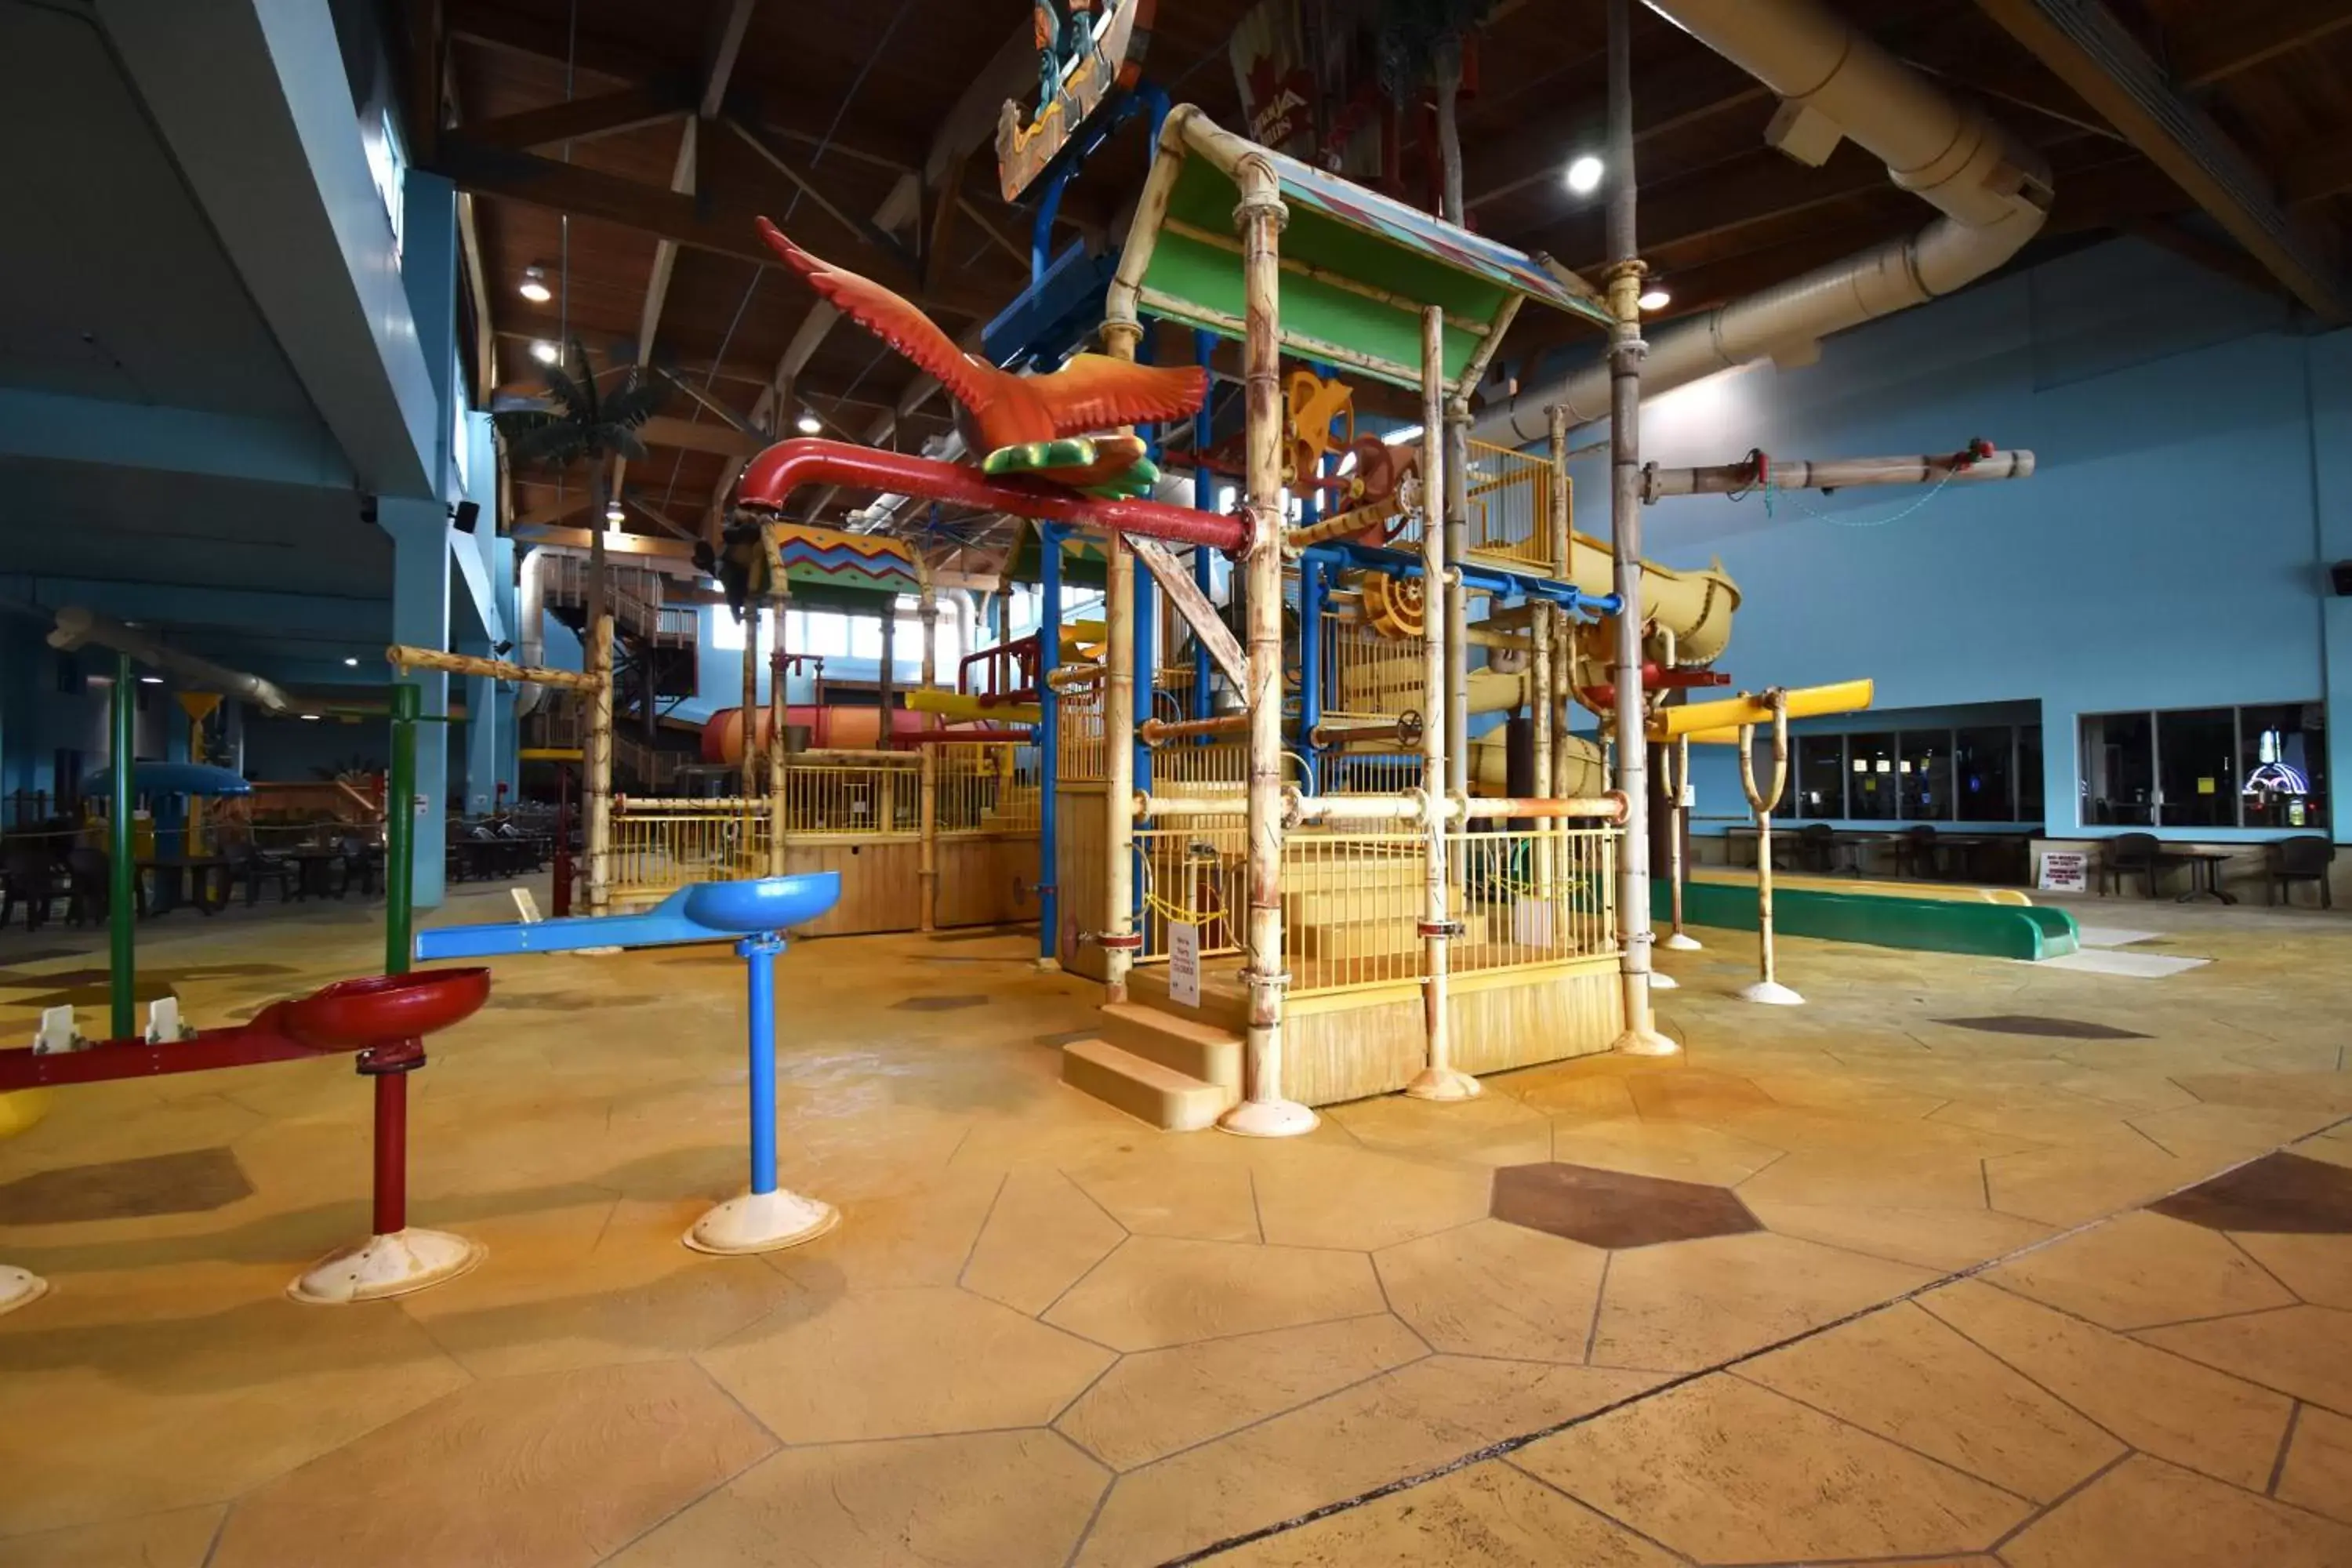 Aqua park, Children's Play Area in Canad Inns Destination Center Grand Forks